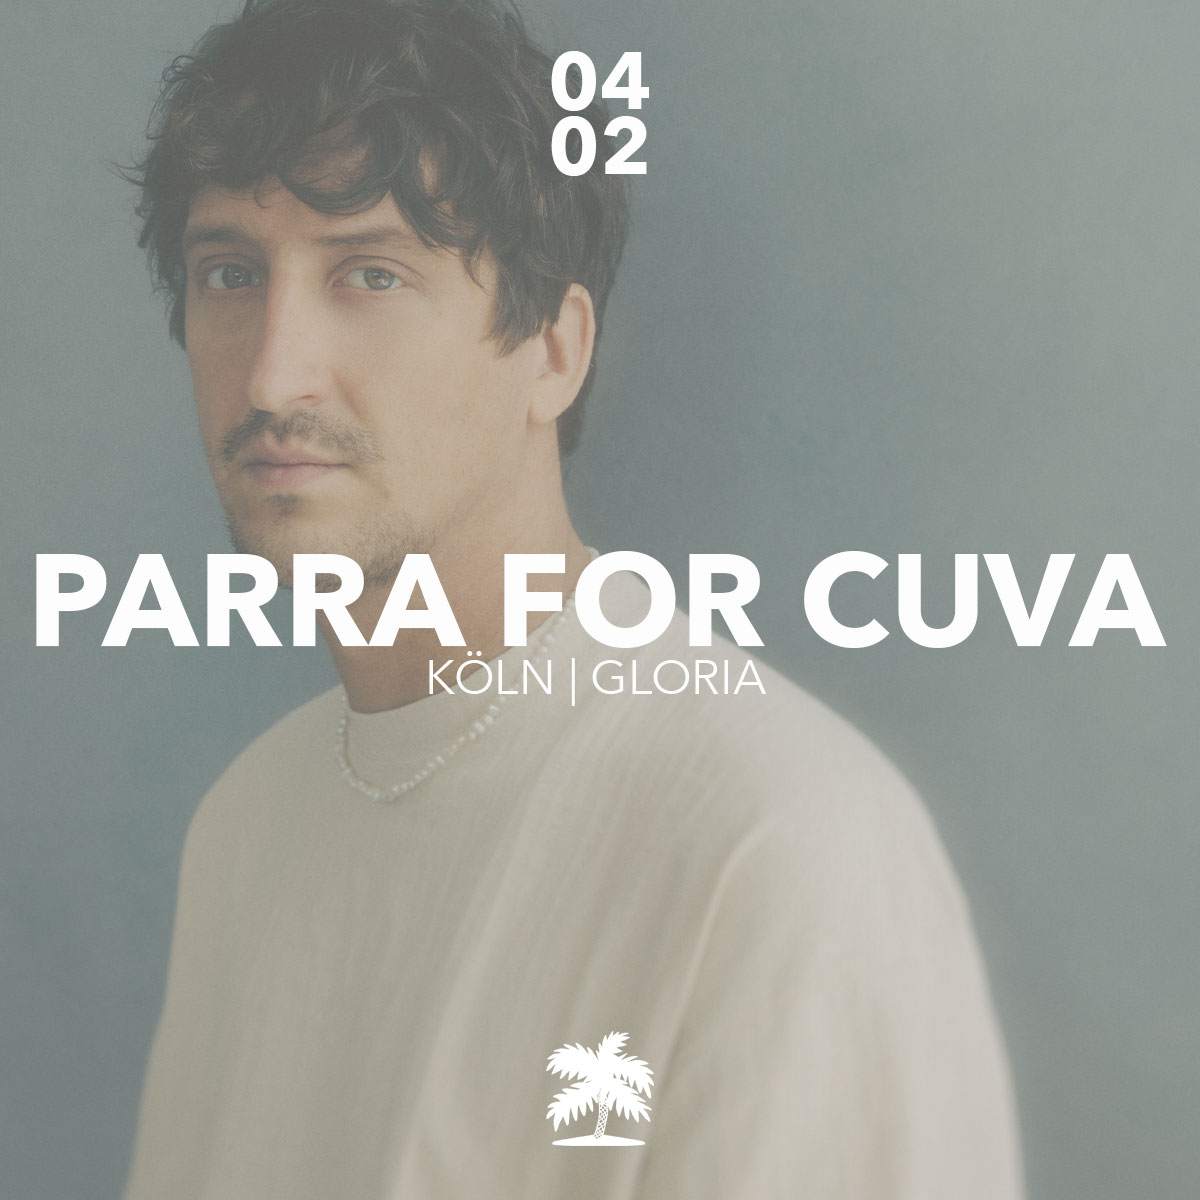 Parra for Cuva - フライヤー表